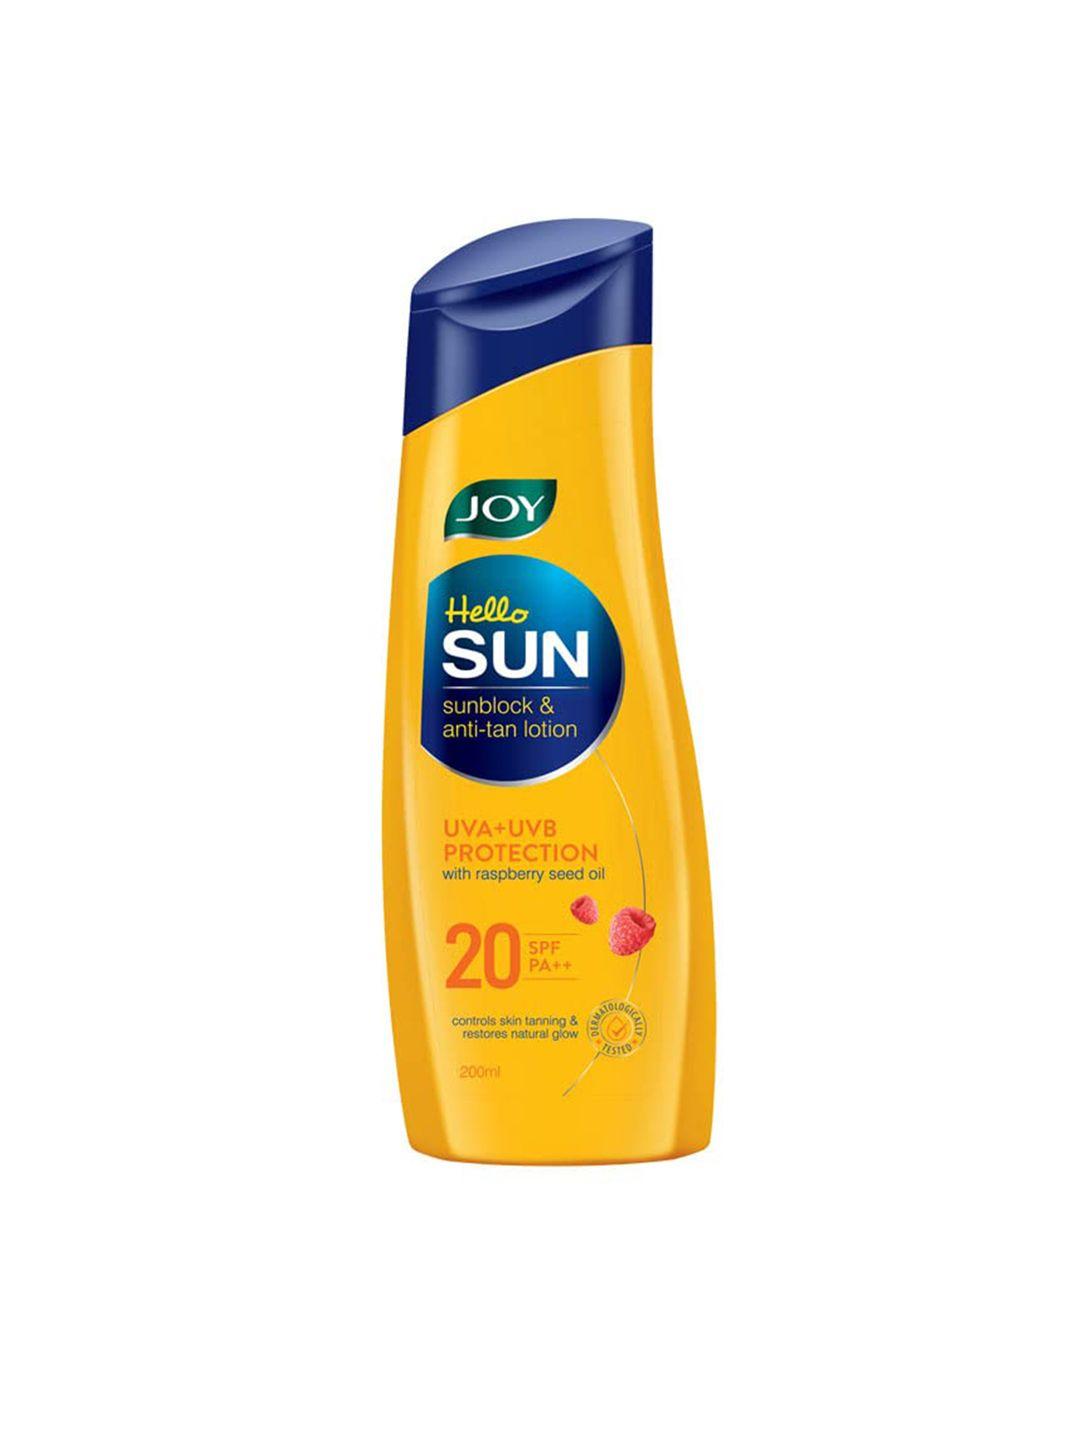 joy hello sun sunblock & anti-tan lotion spf 20 pa++ sunscreen - 200ml